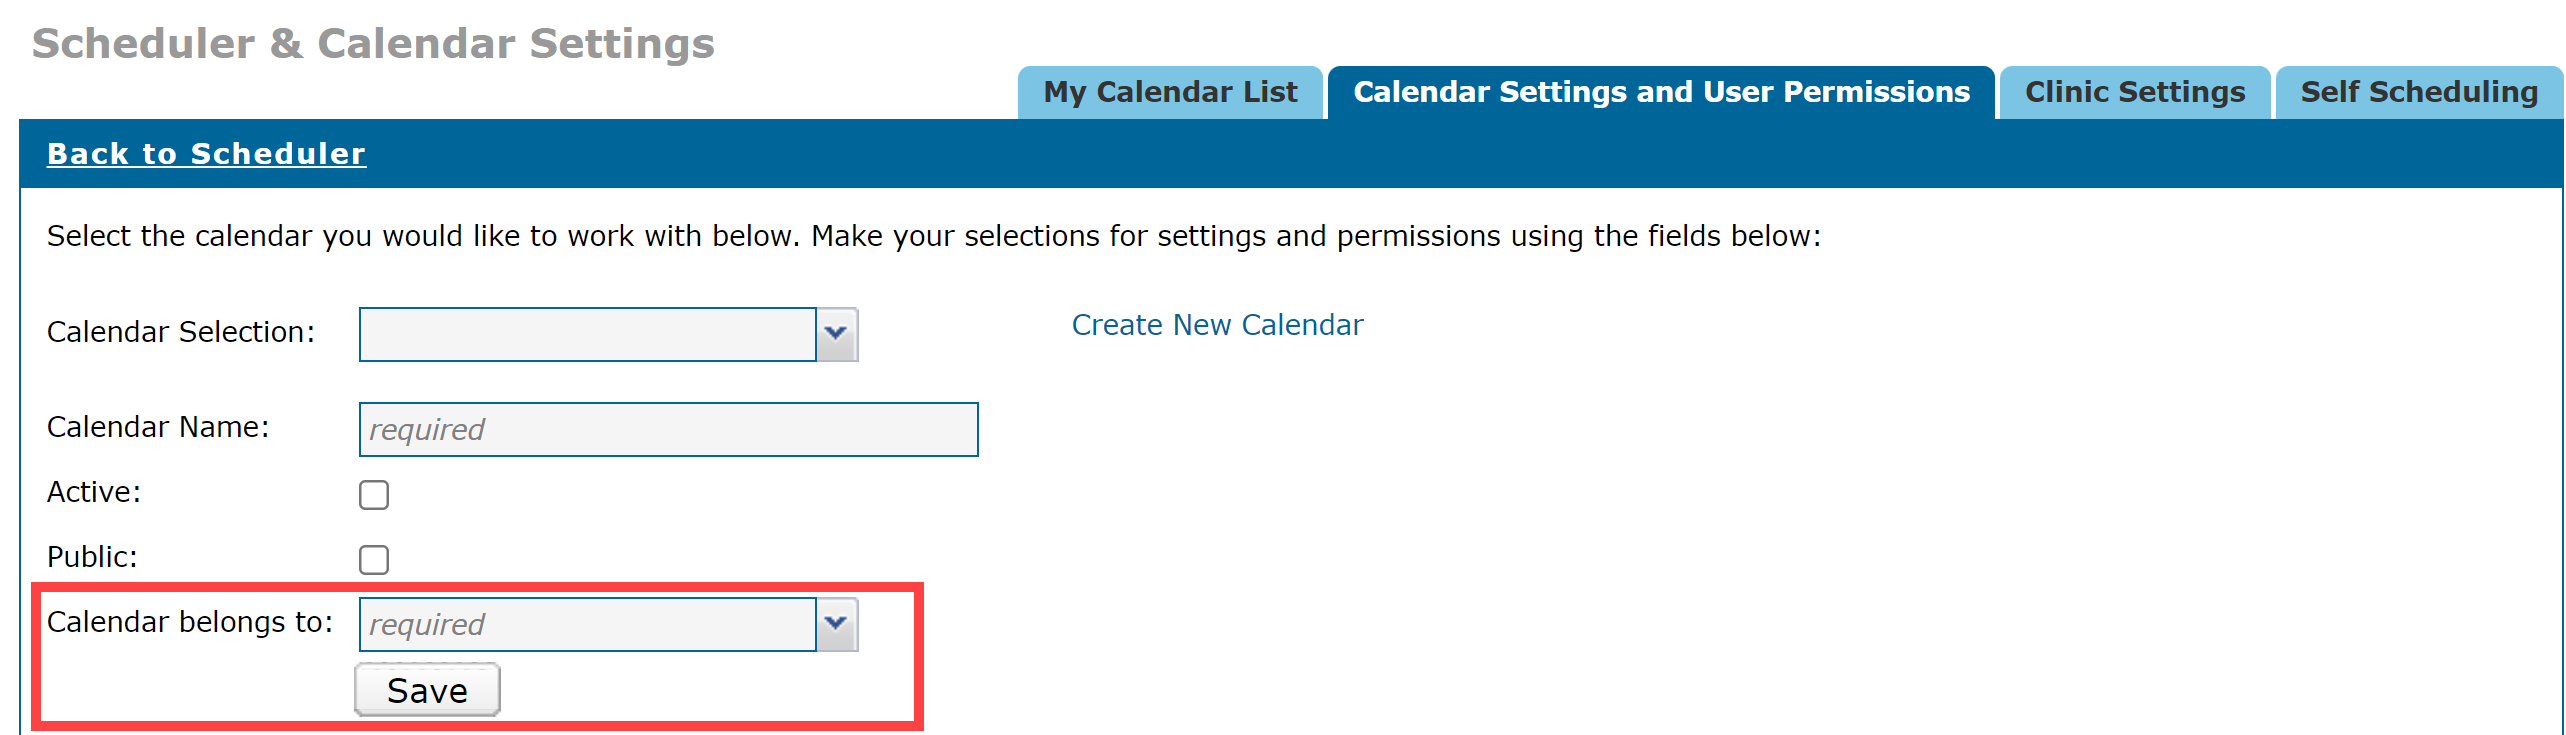 EMR_Manage Calendars_Calendar Settings_User Permissions_Calendar belongs to